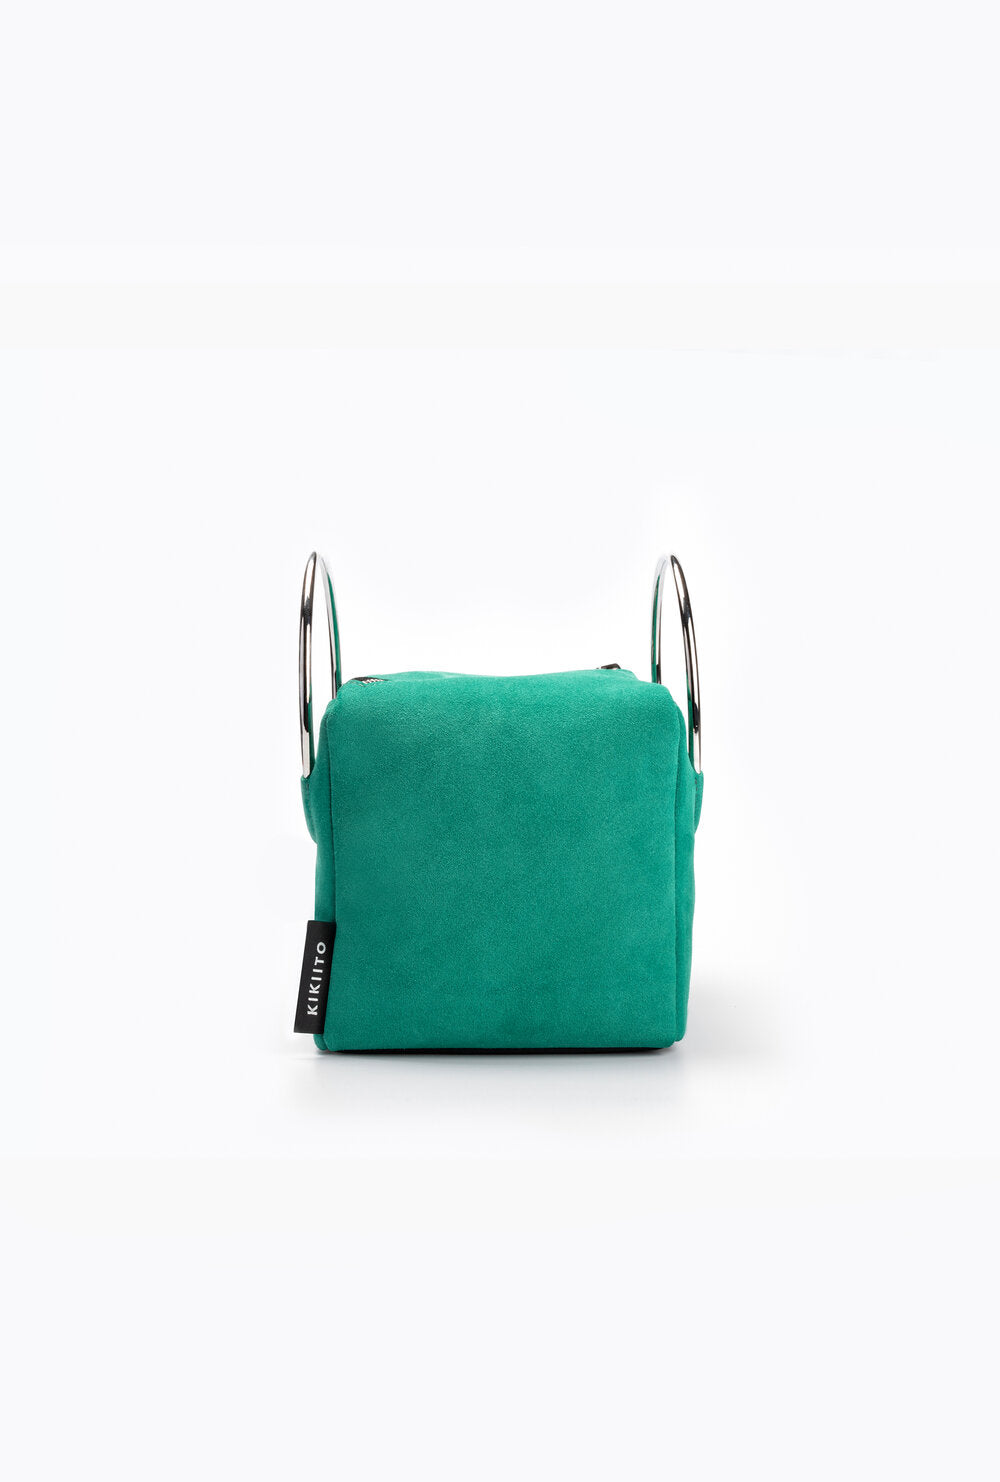 SHOKUPAN HYBRID BOX BAG - GREEN | Pre-Order Available